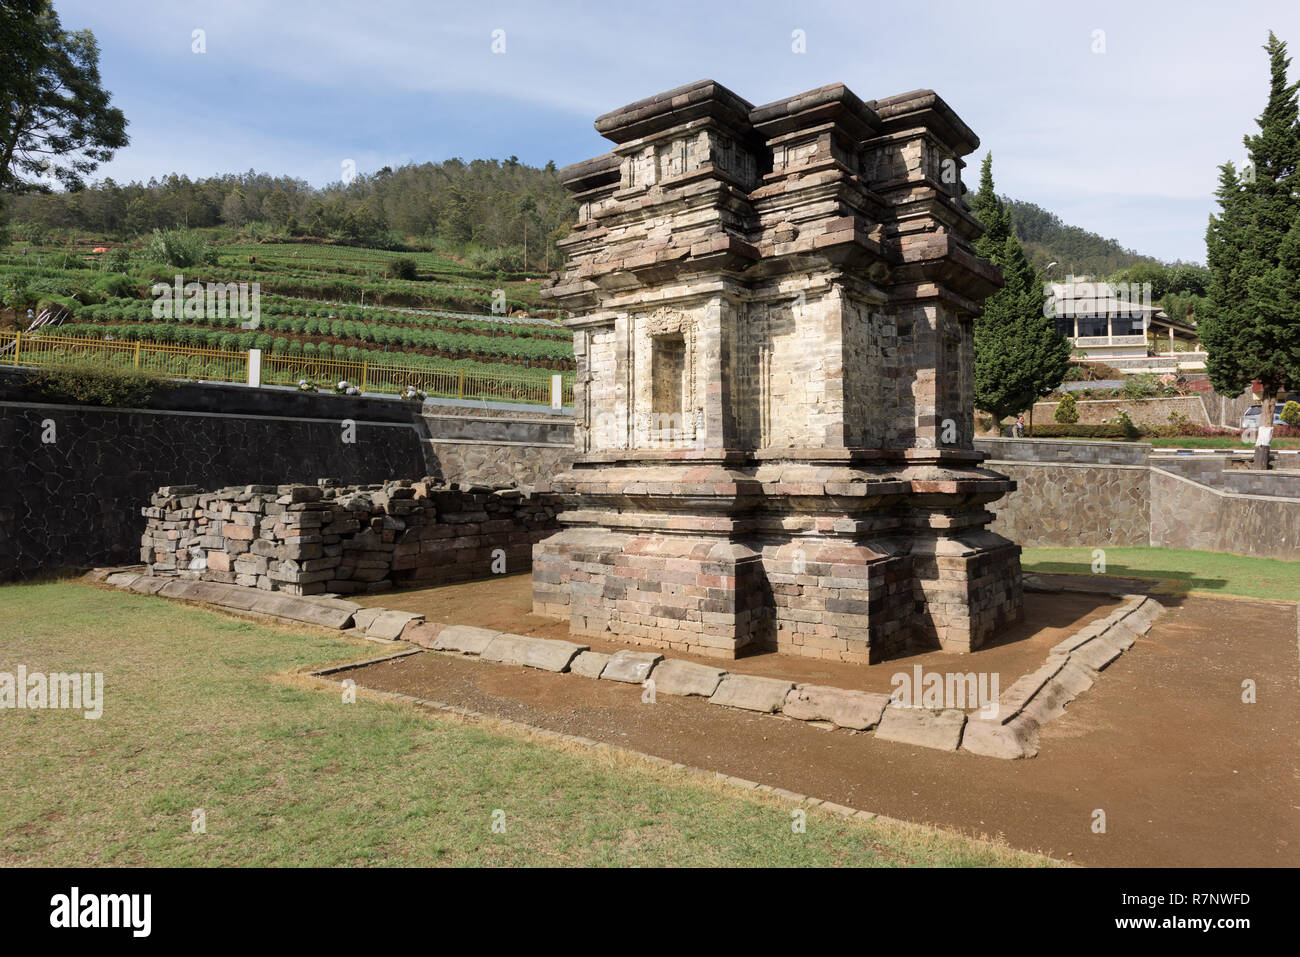 Candi Gatotkaca hindu temple, near Arjuna complex in Dieng Plateau, Central Java, Indonesia. Stock Photo